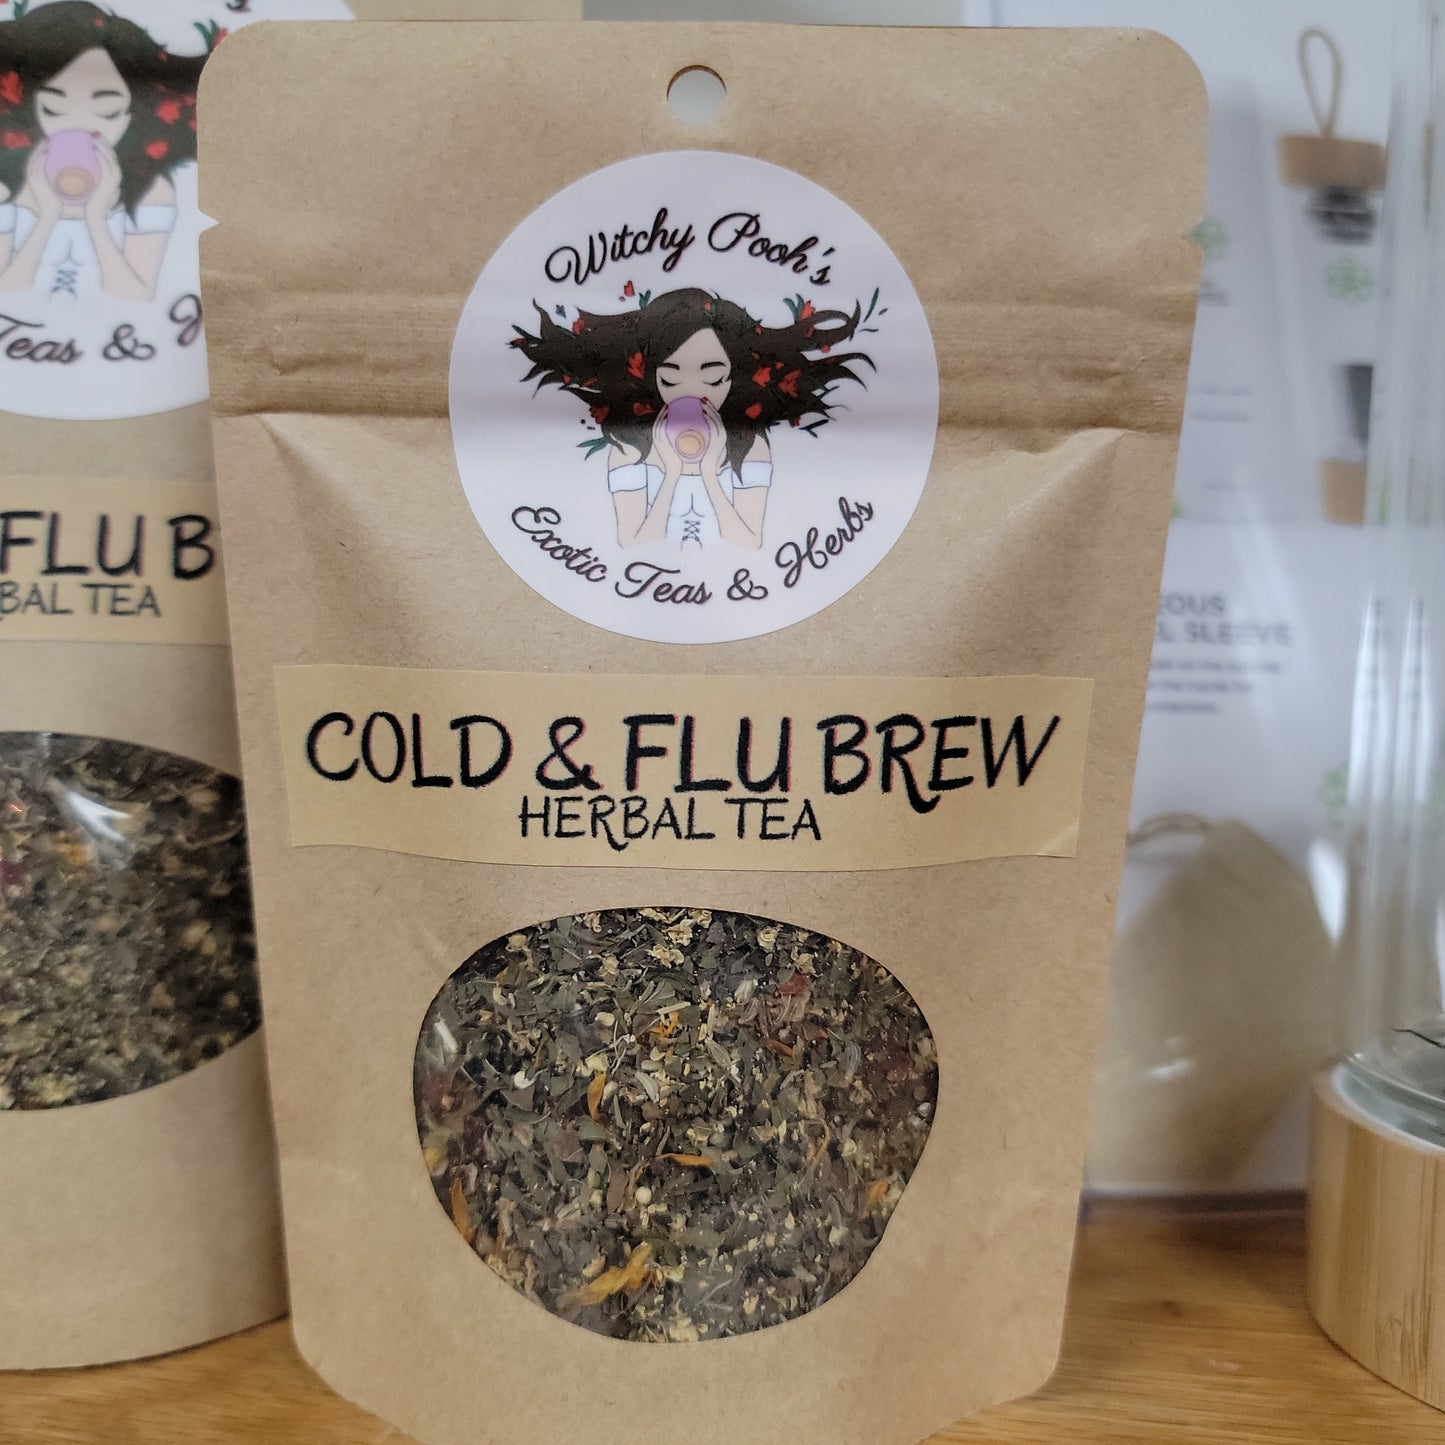 Cold & Flu Brew Herbal Tea